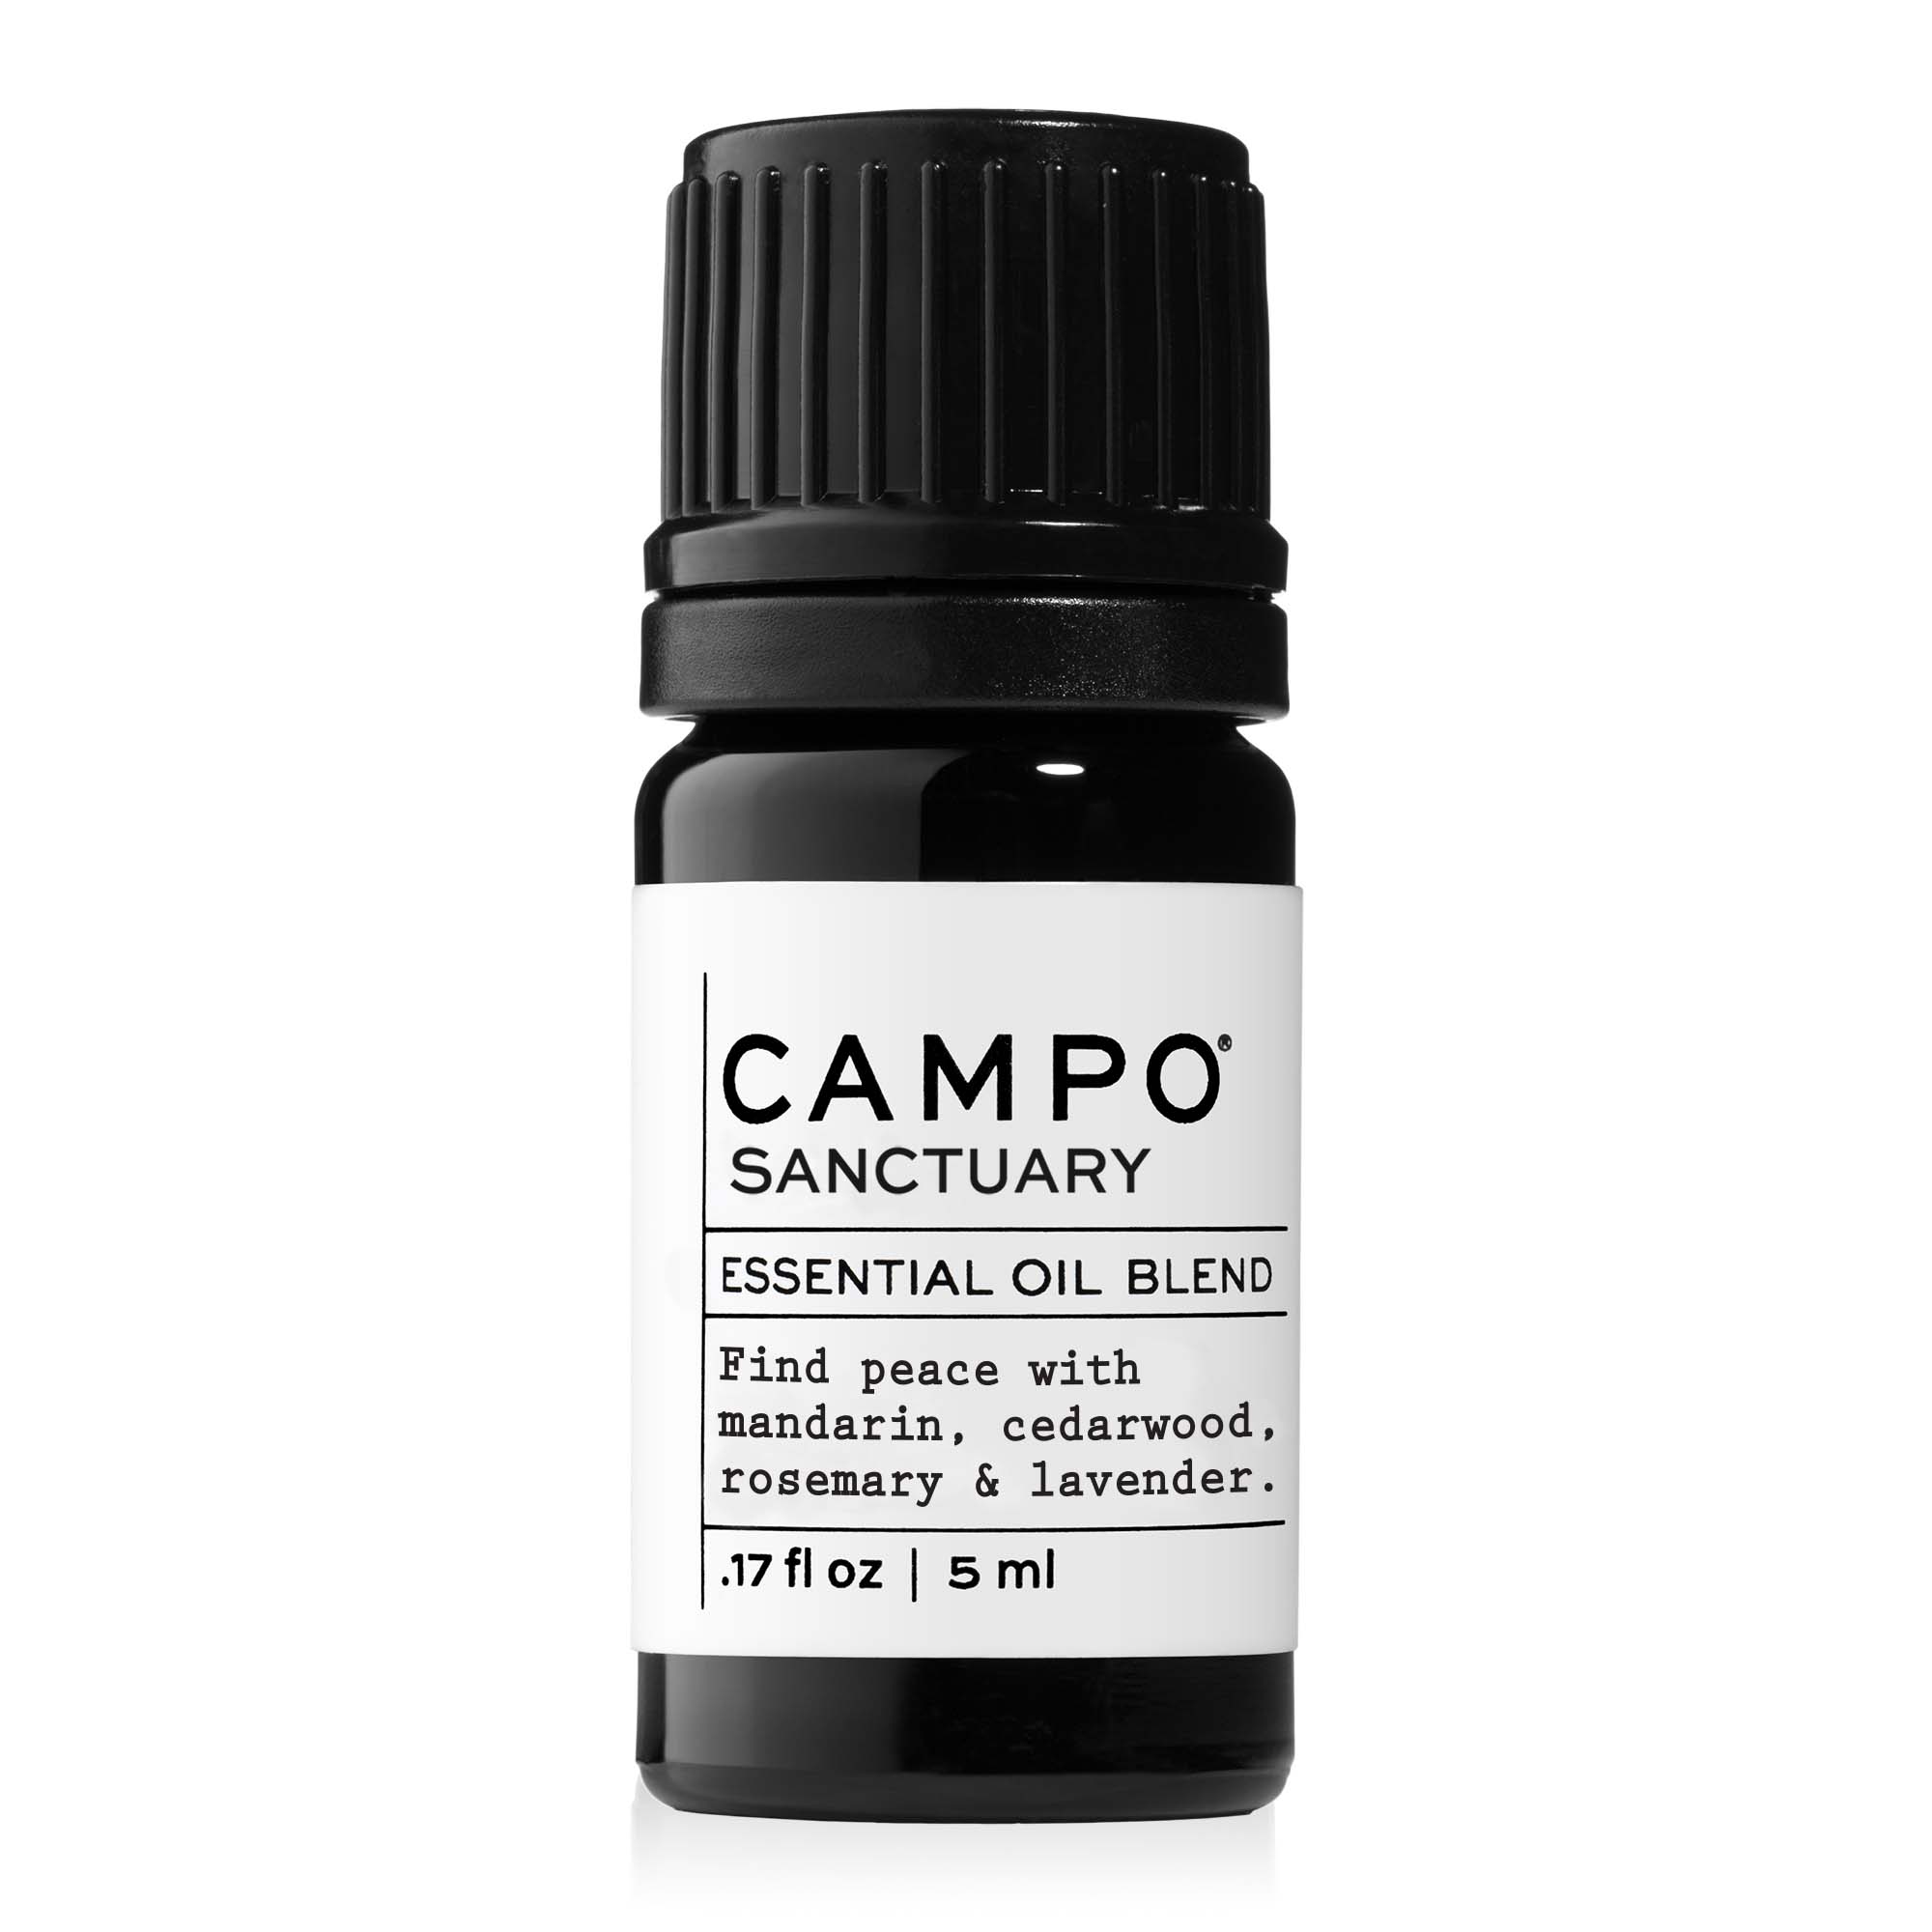 CAMPO Sanctuary Pure Blend in 15ML